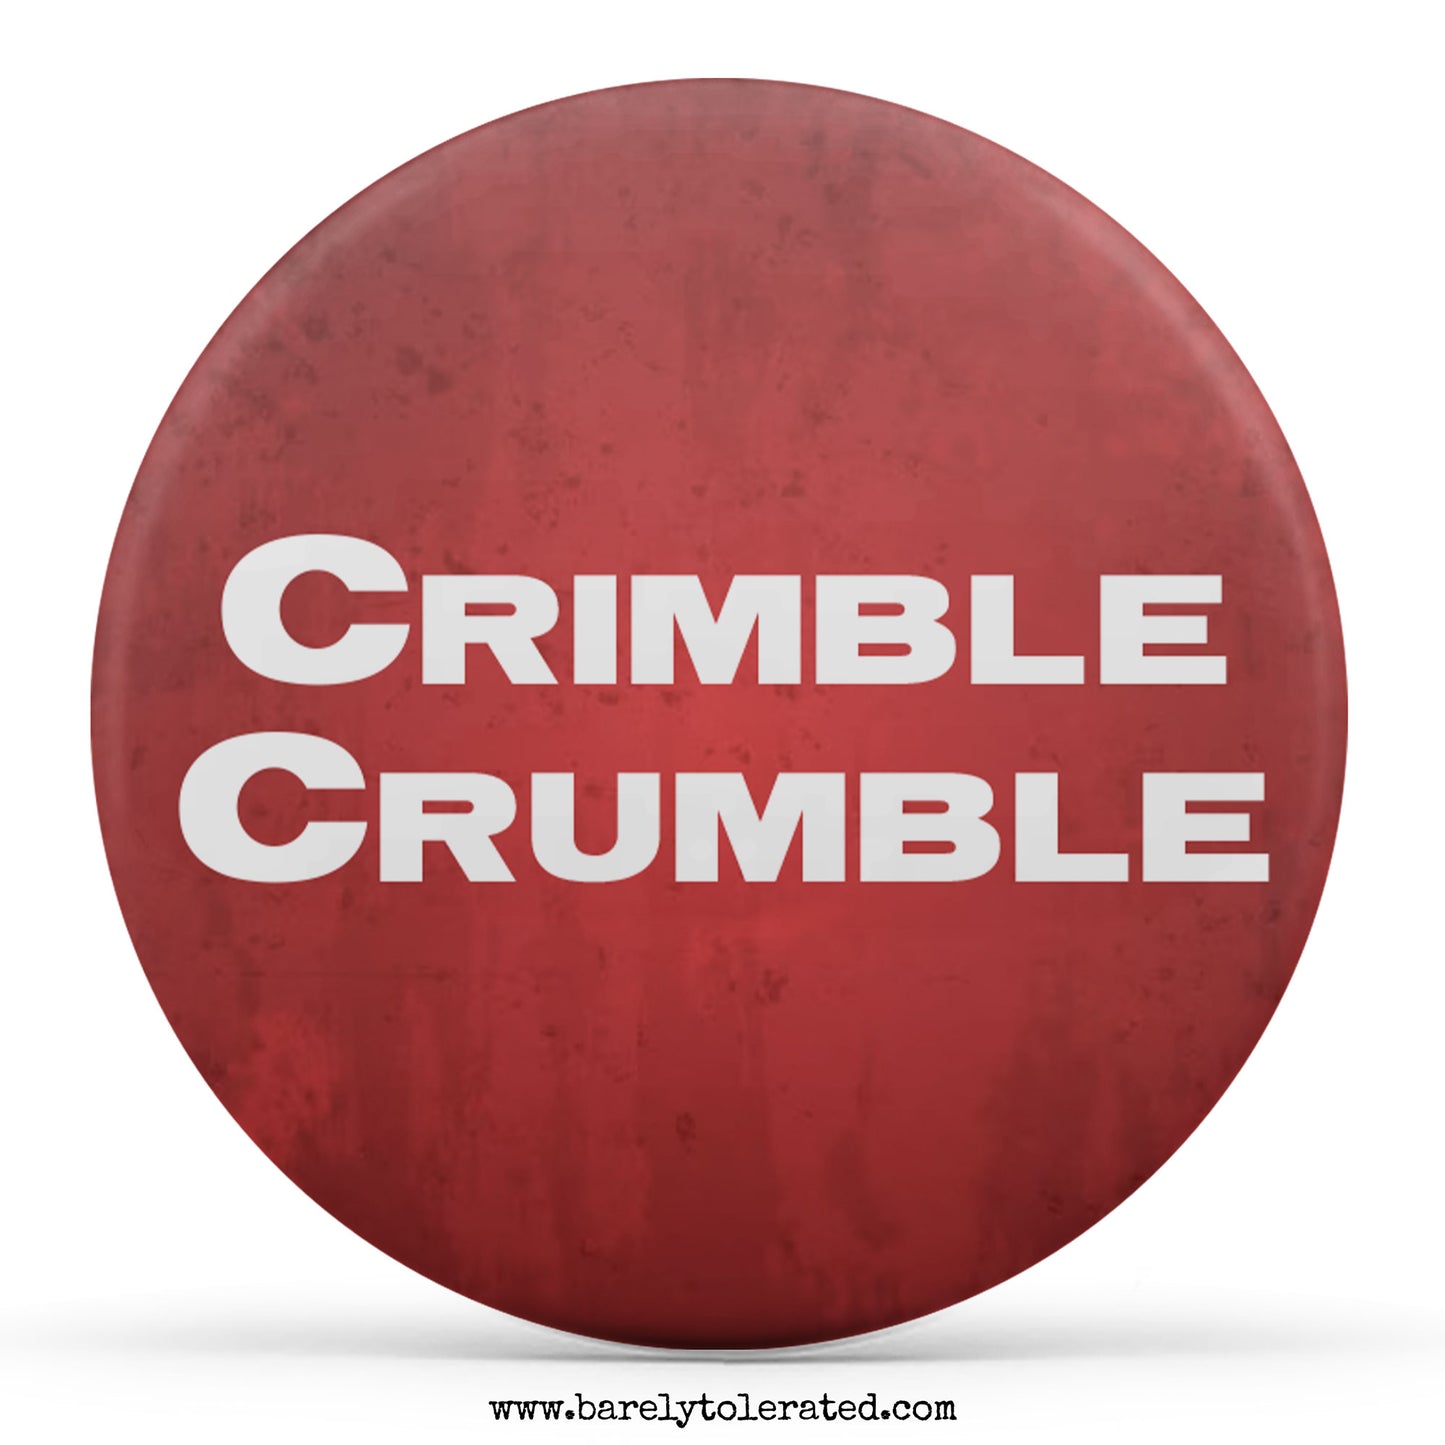 Crimble Crumble